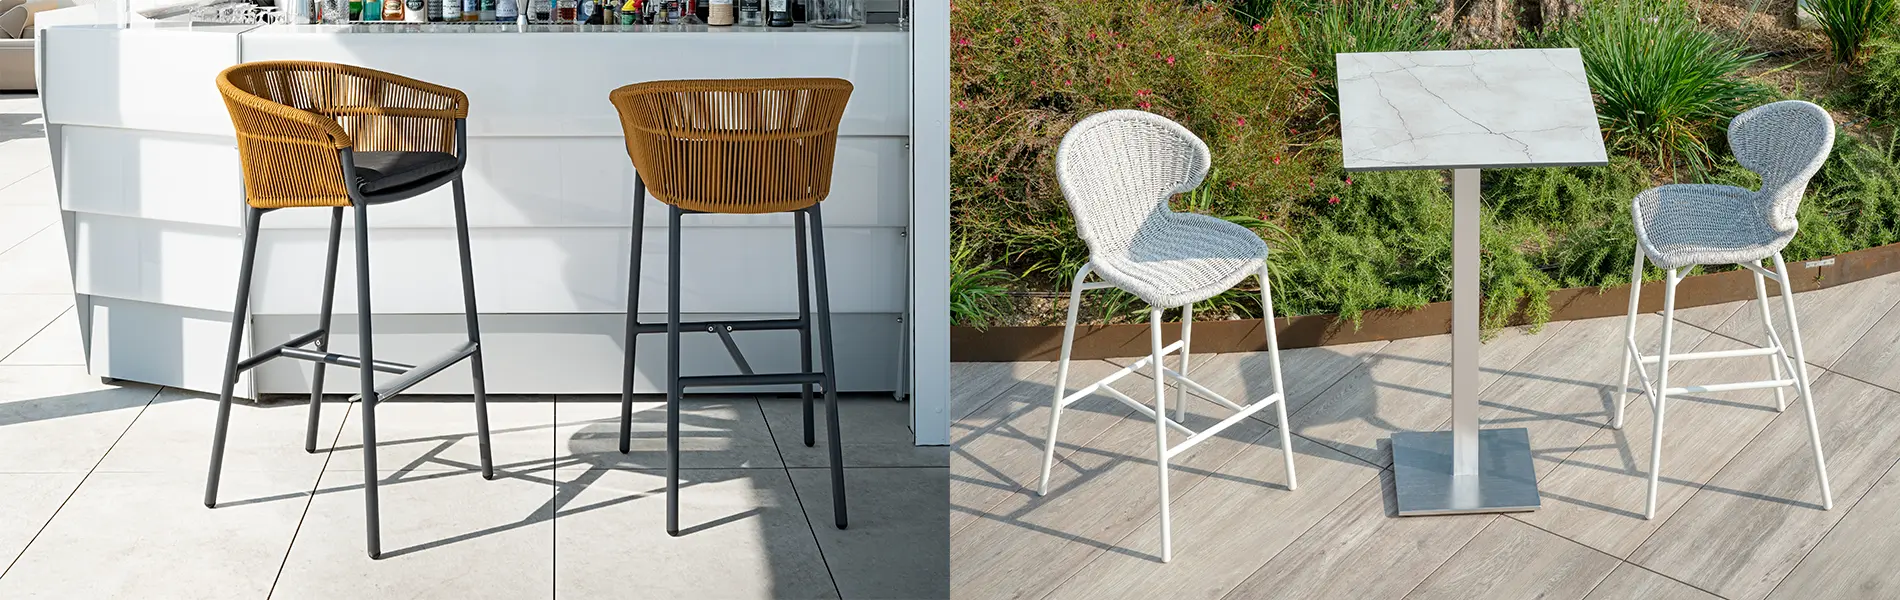 Outdoor bar stools